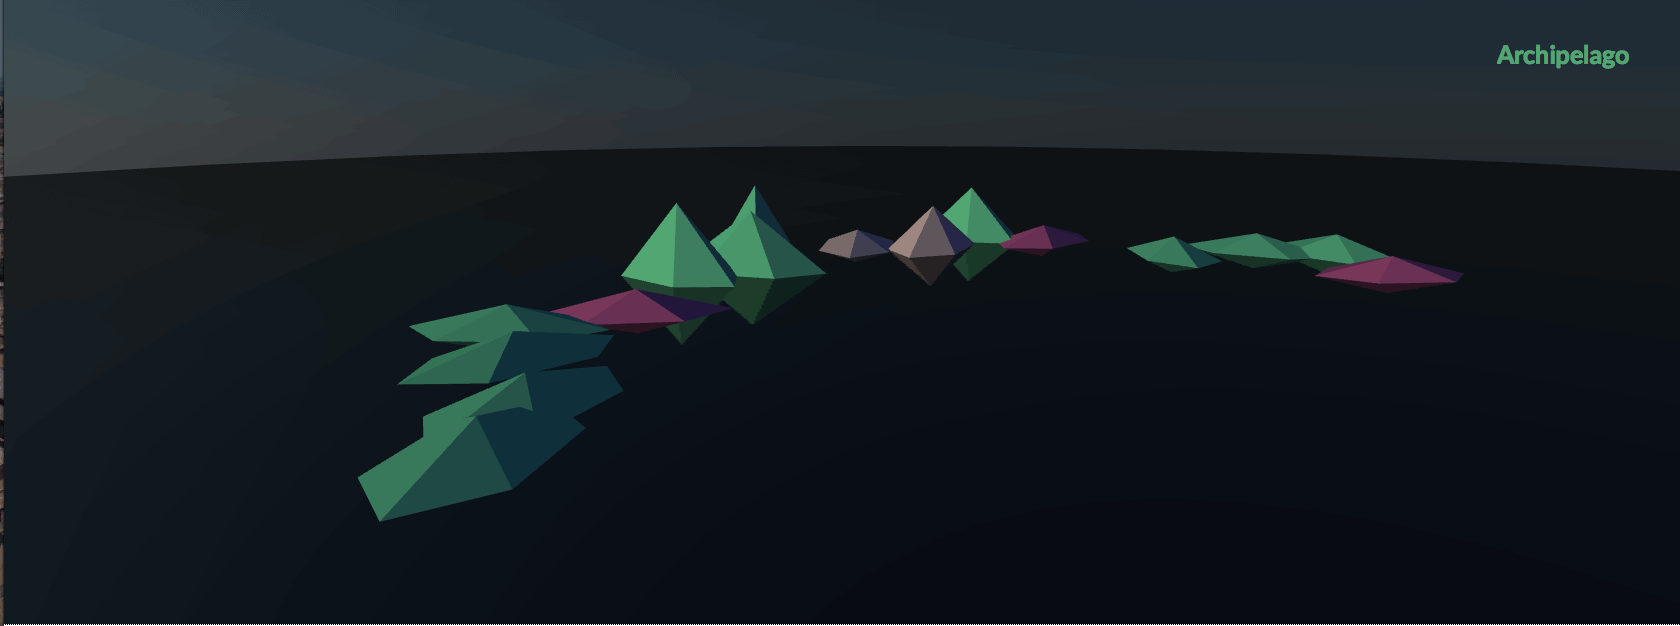 Another Screenshot of Archipelago Visualiser